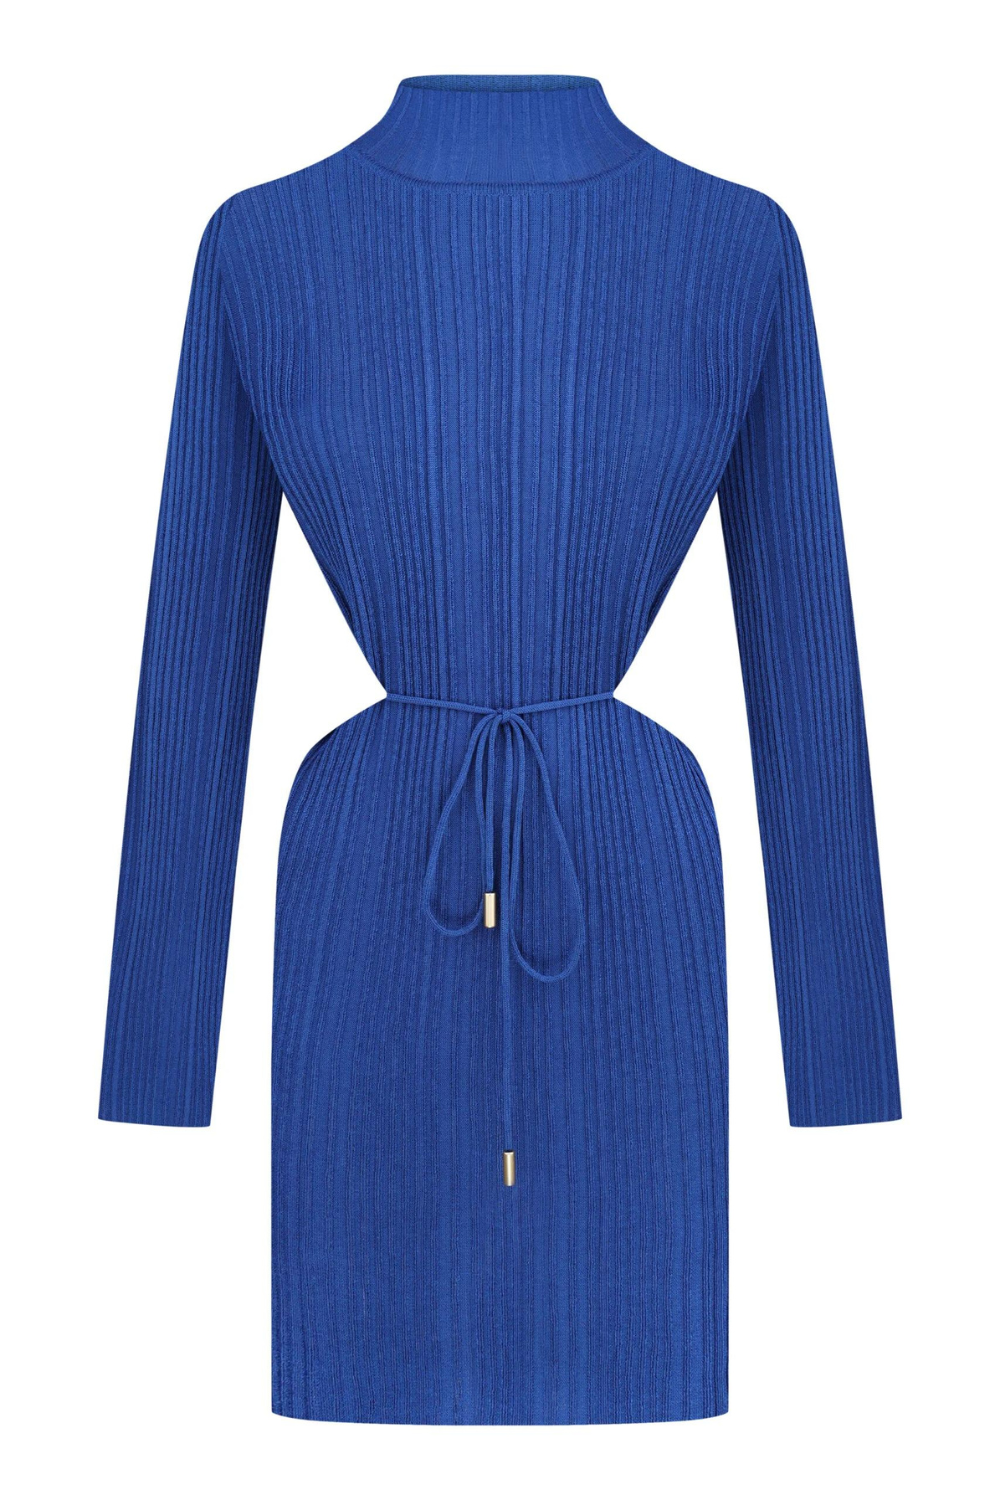 Knitted dress dark blue (K.KVIT, T.MOSCA) PDJ23-03